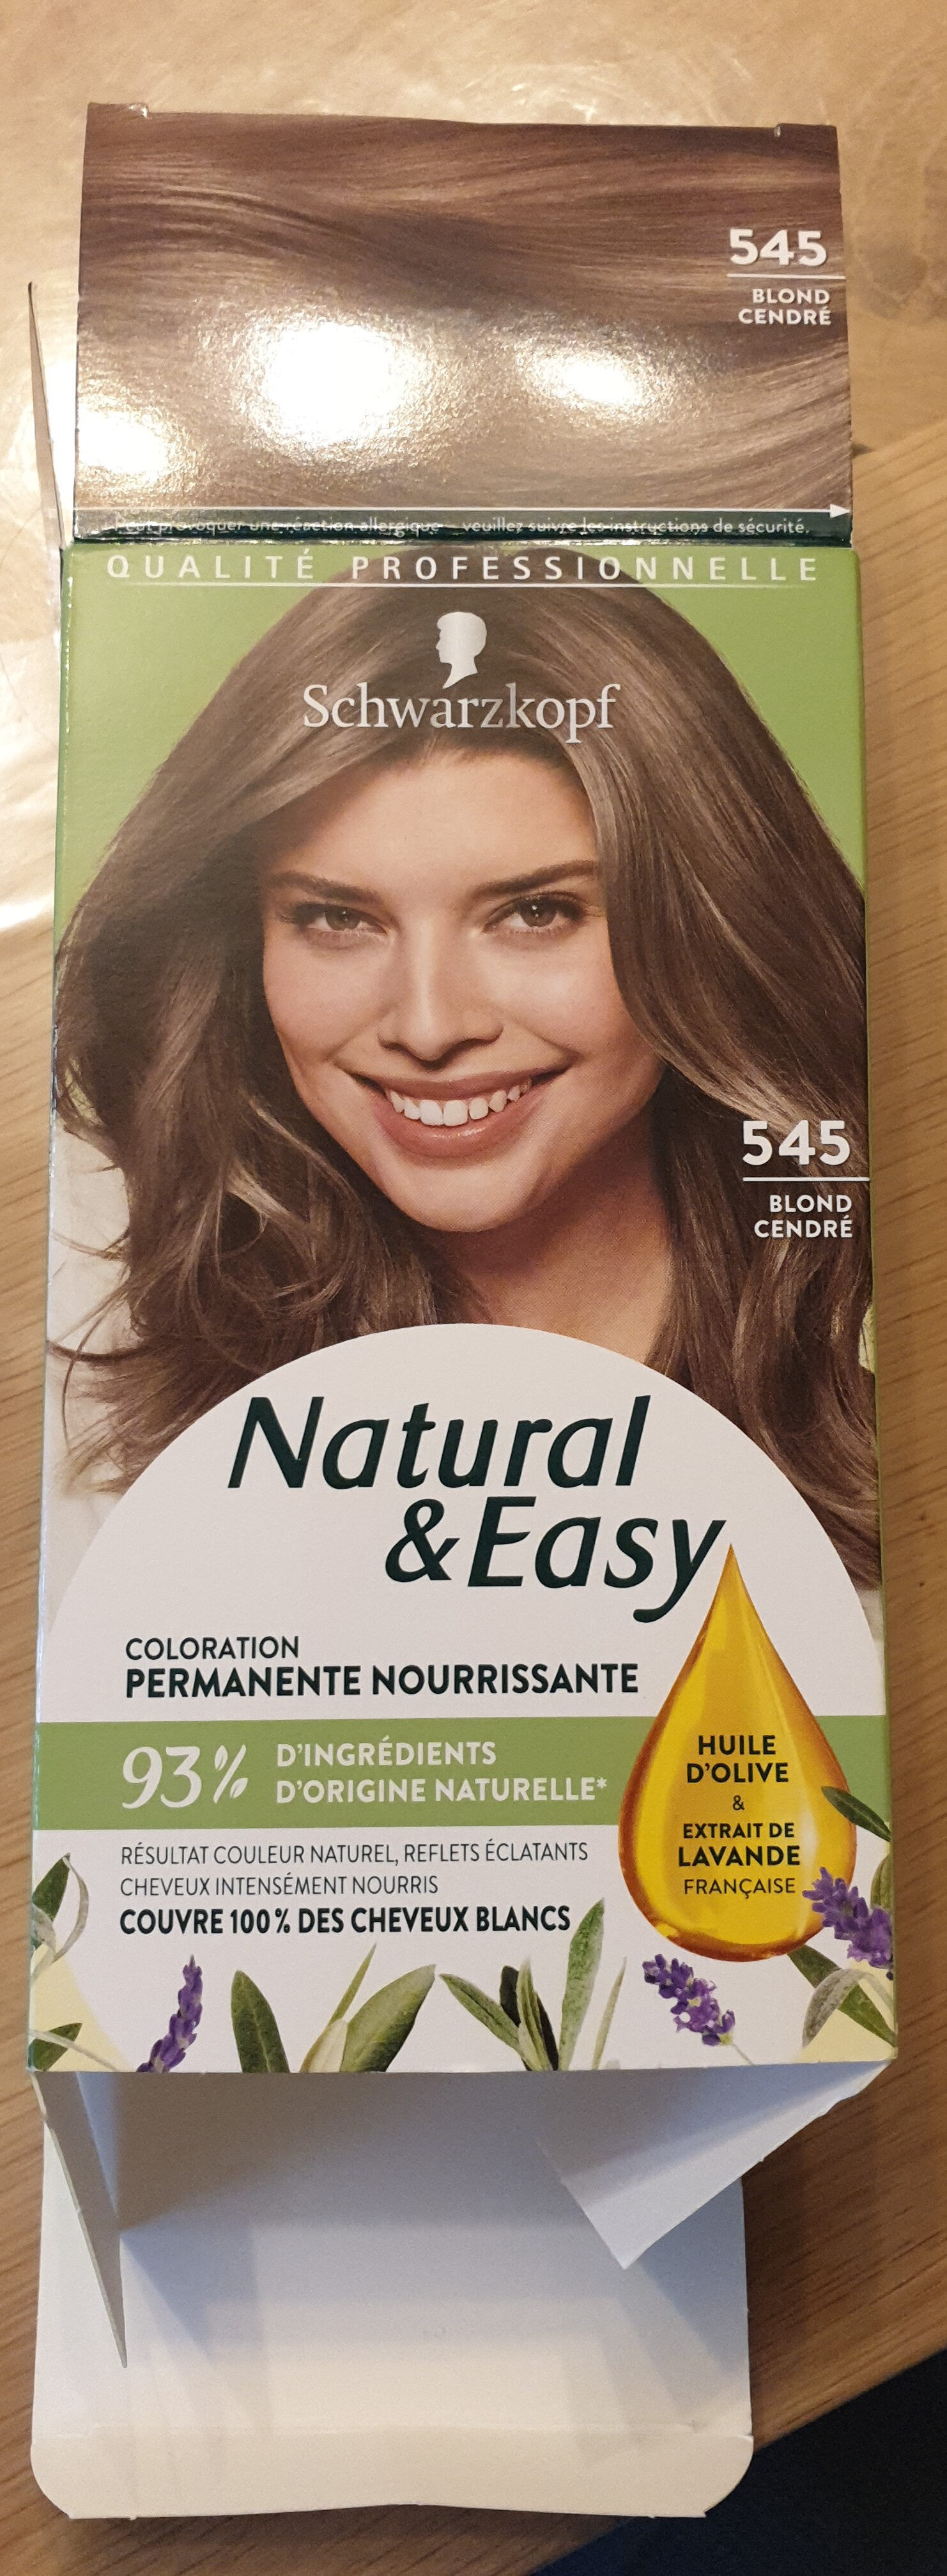 Natural & Easy 545 blond cendré - Product - fr